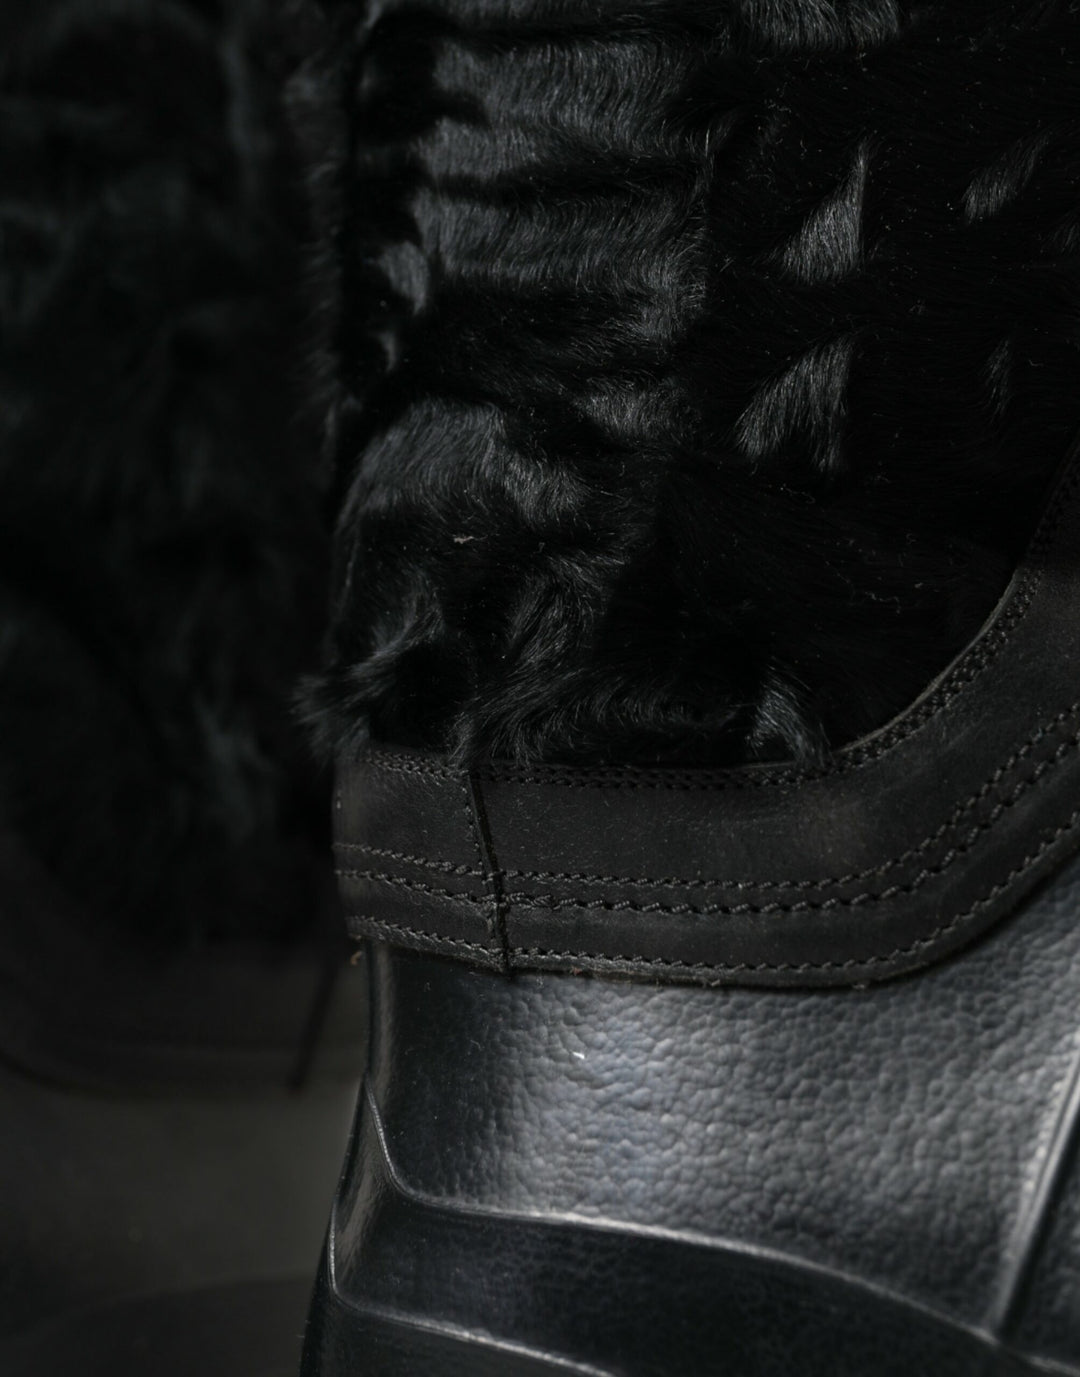 Dolce & Gabbana Sleek Black Shearling Mid Calf Boots